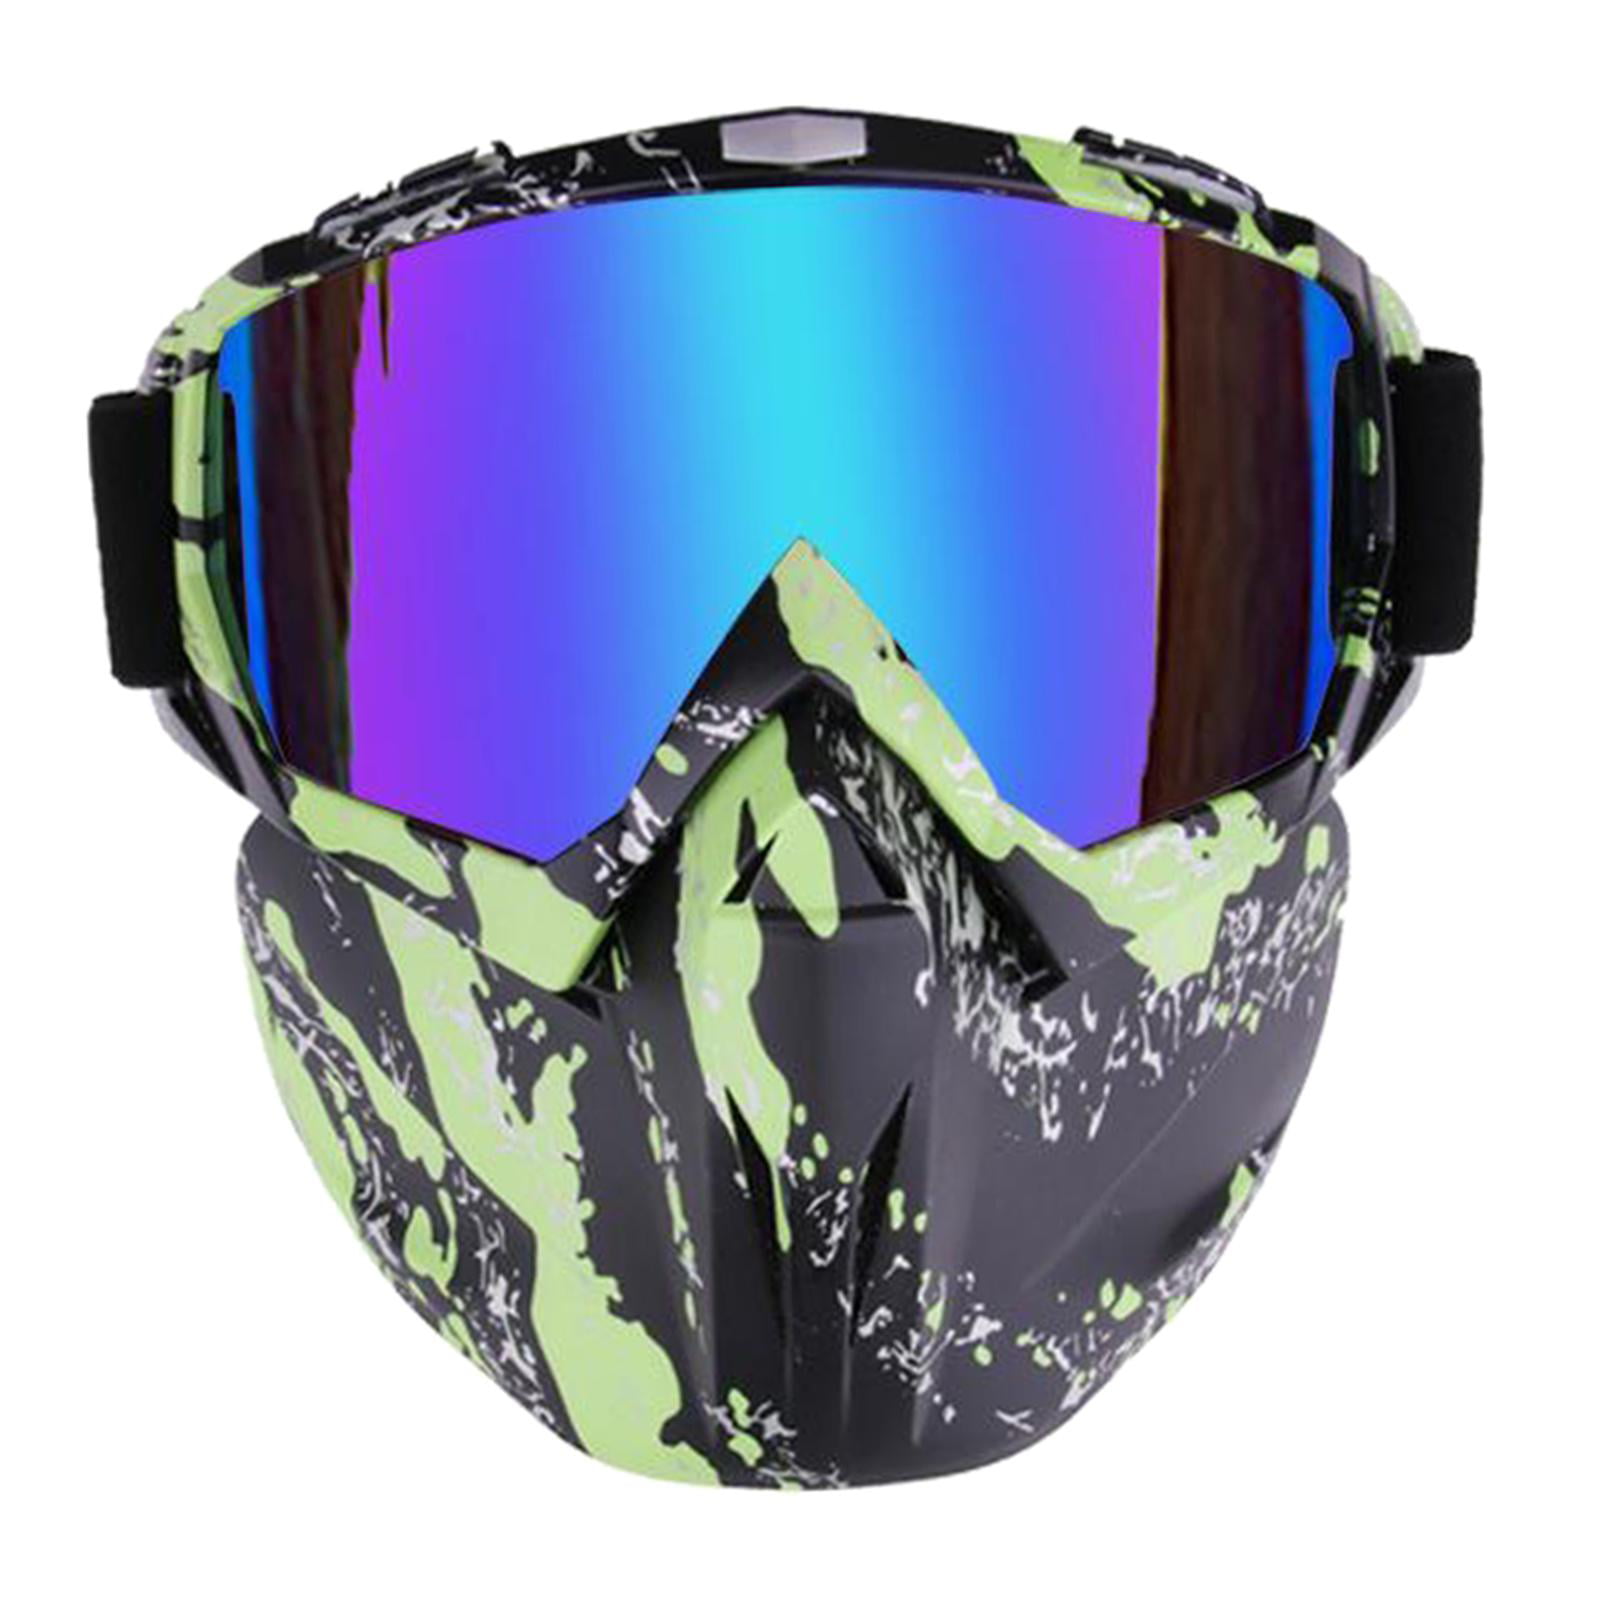 Anti Splash Ski Safety Glasses Goggles Windproof Motorcycle Eyewear with 